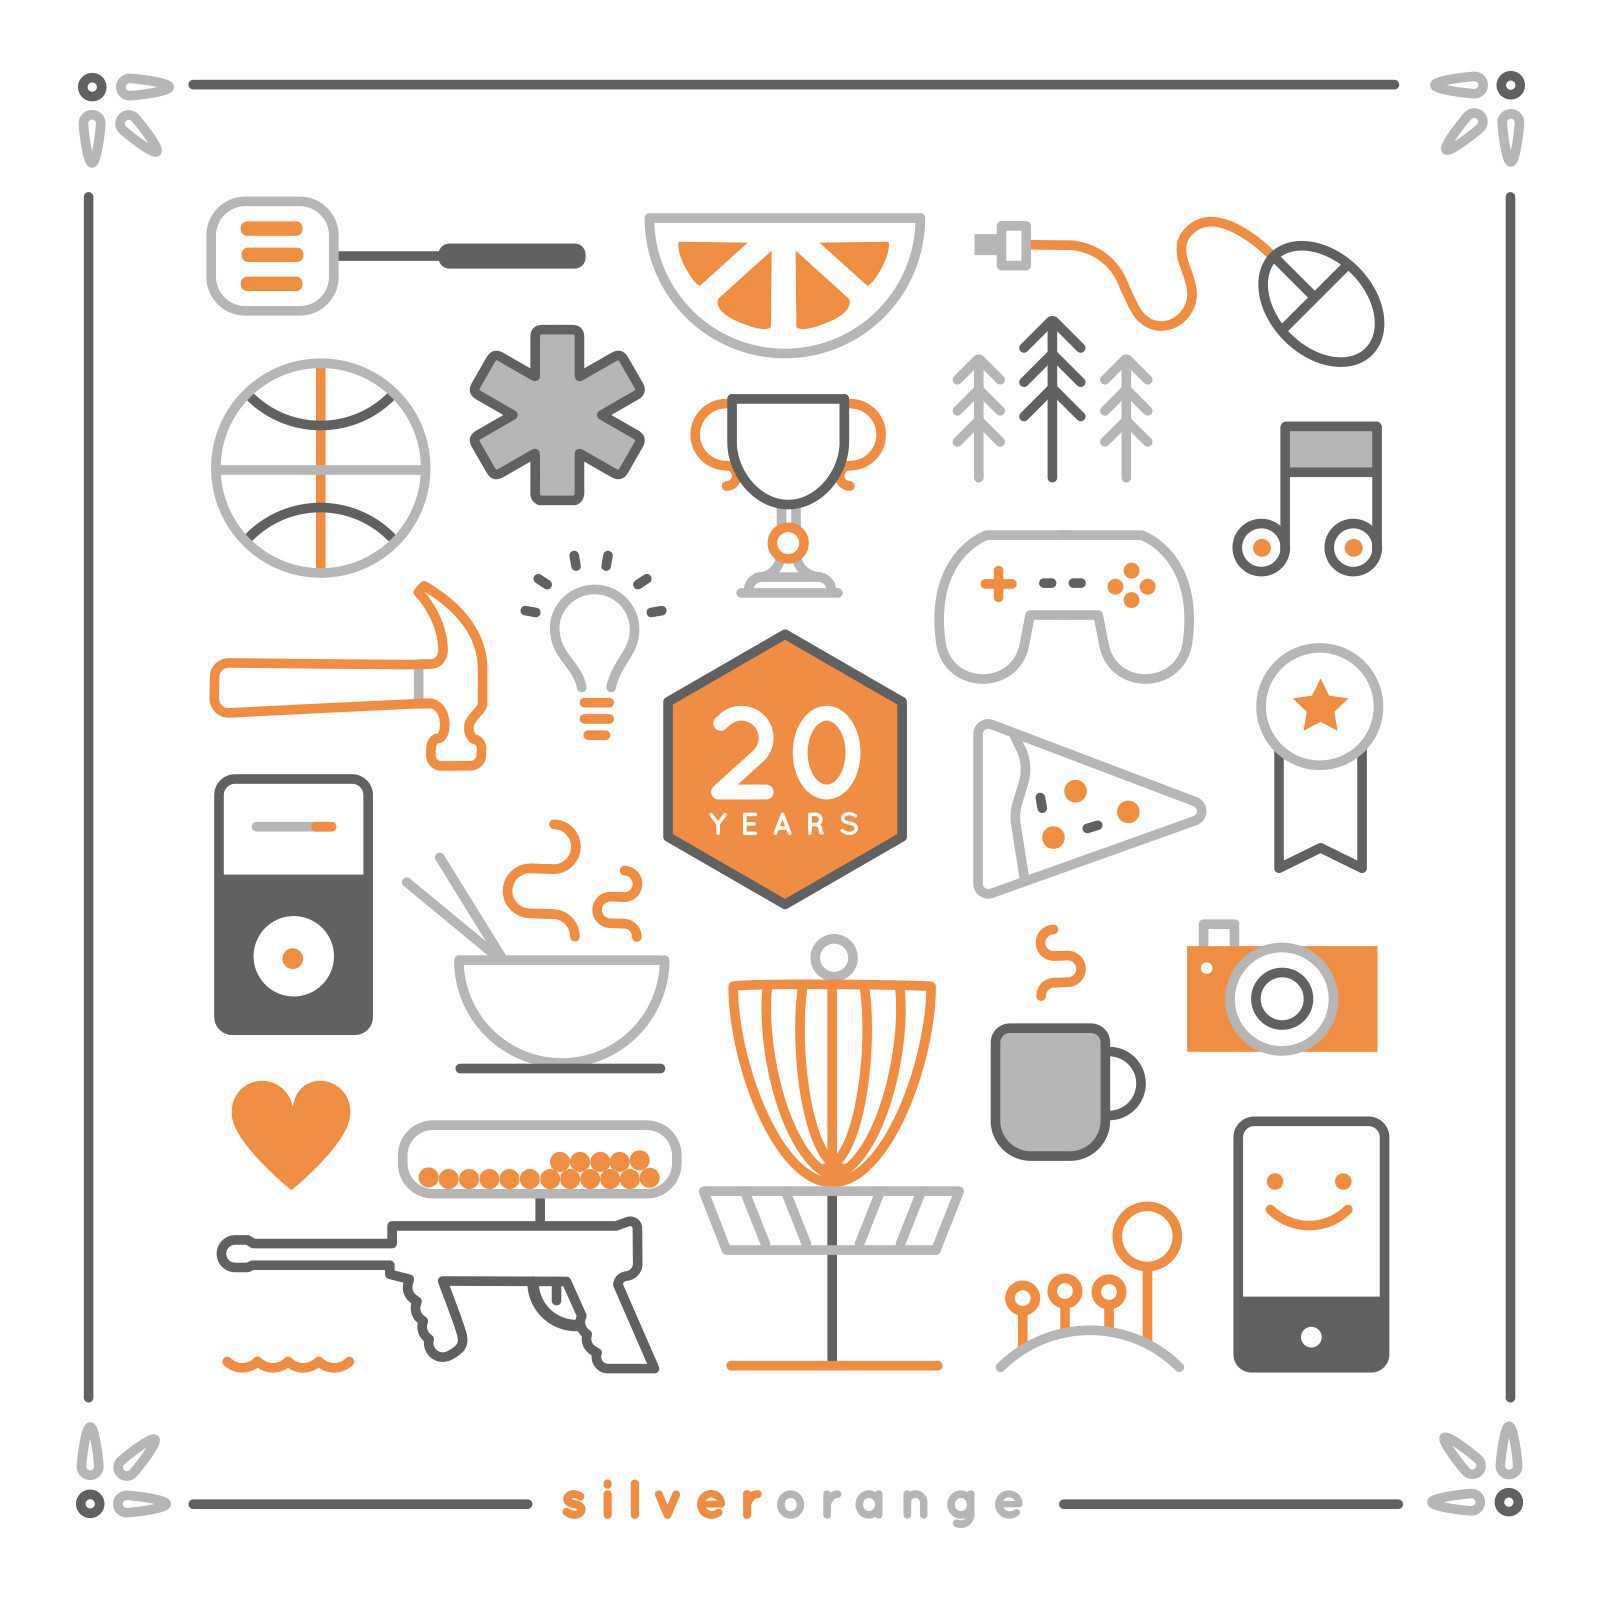 Arrangement of stylized line art illustrations including orange slice, iPod, basketball, game controller, music notes, trophy, tools, etc.